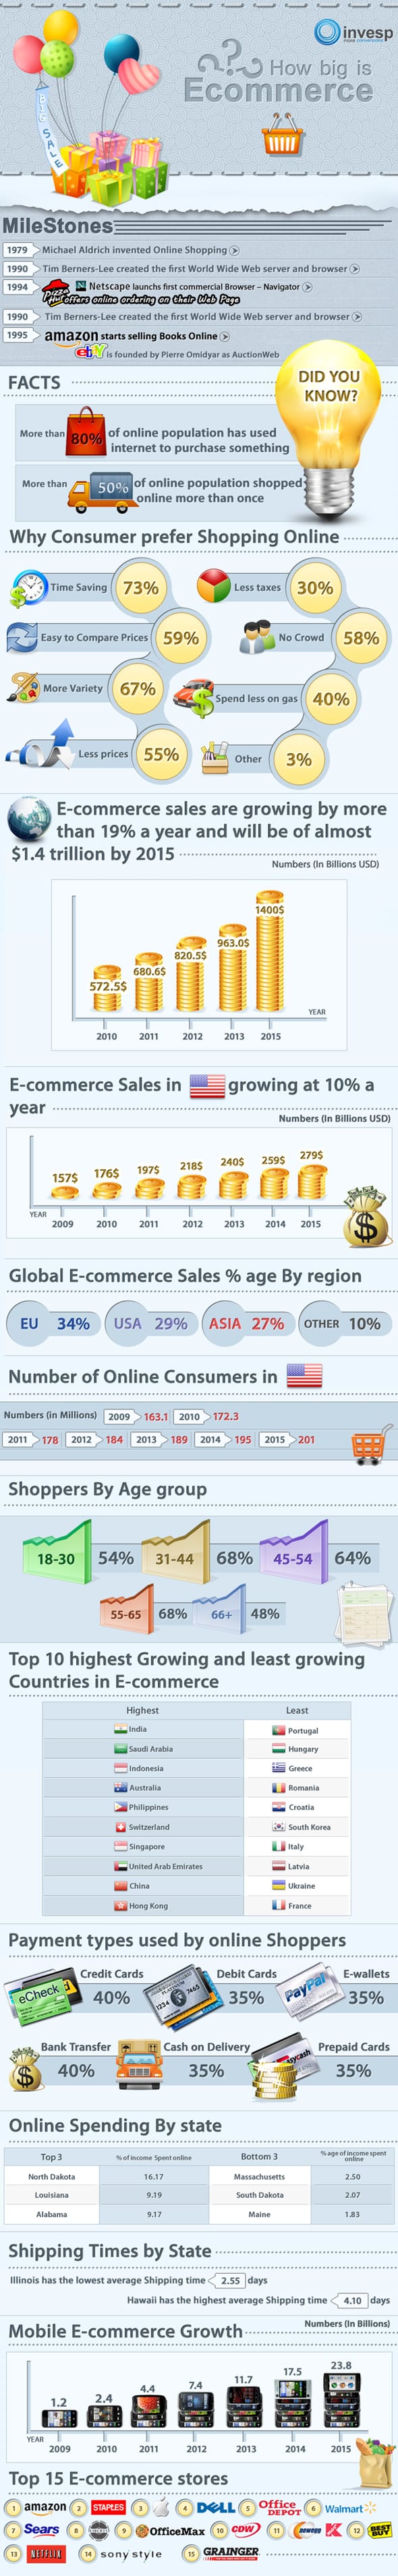 infographic_ecommerce_how_big